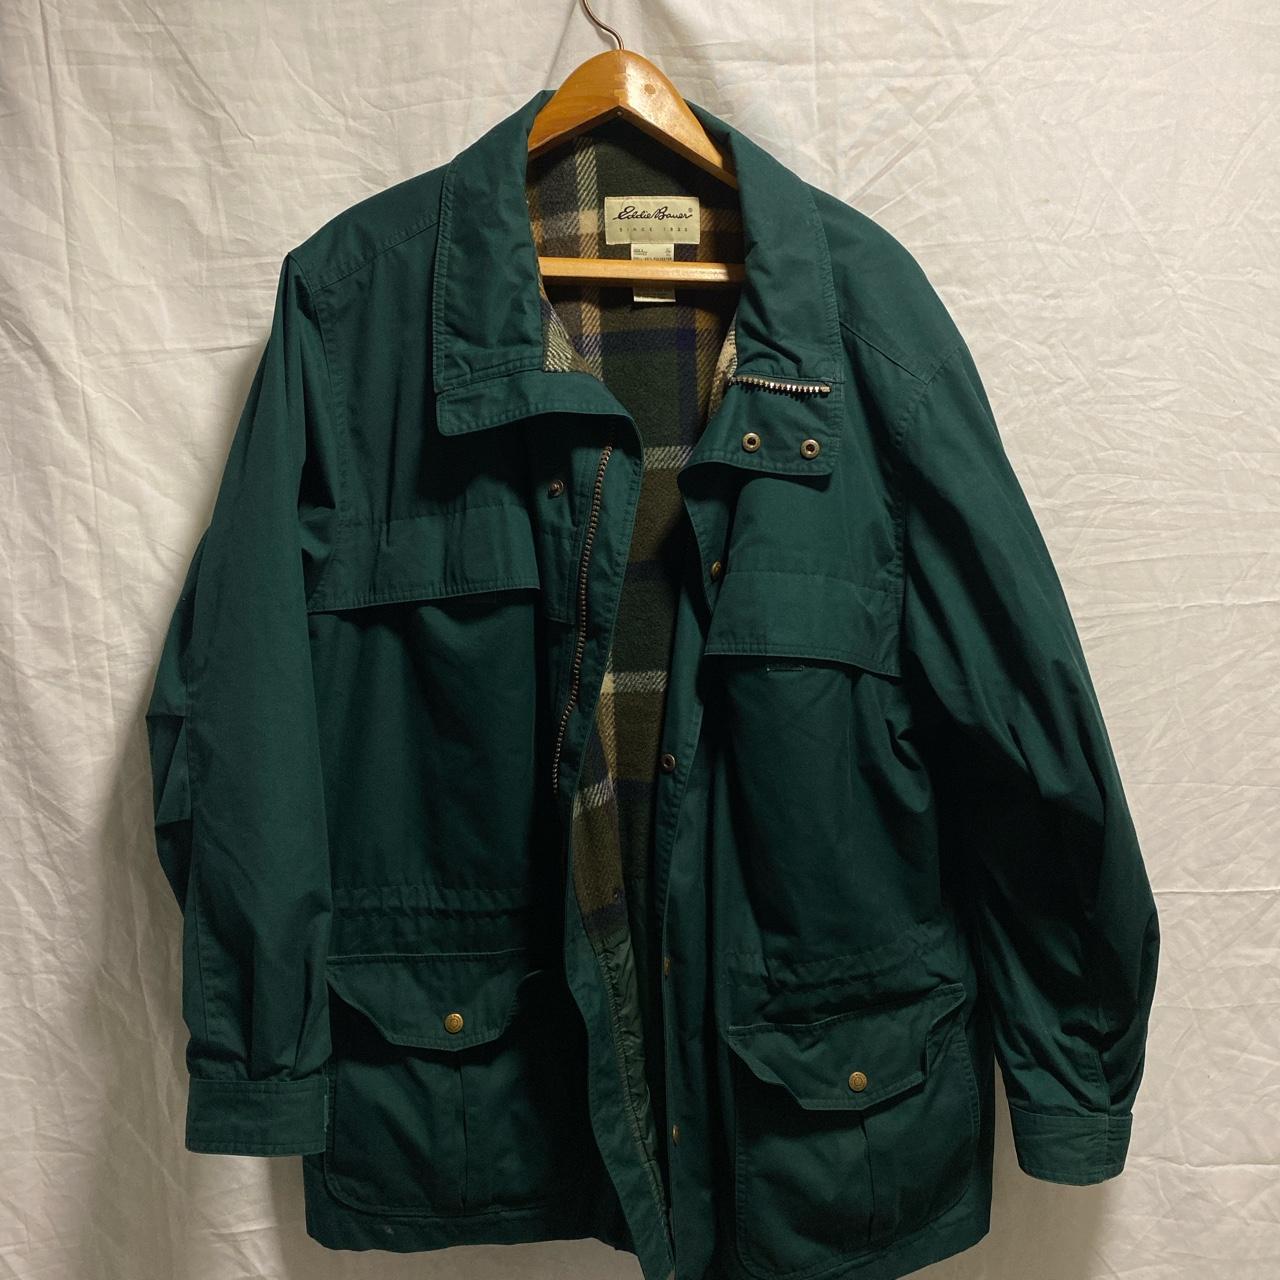 Emerald green Eddie Bower jacket. Part of the... - Depop